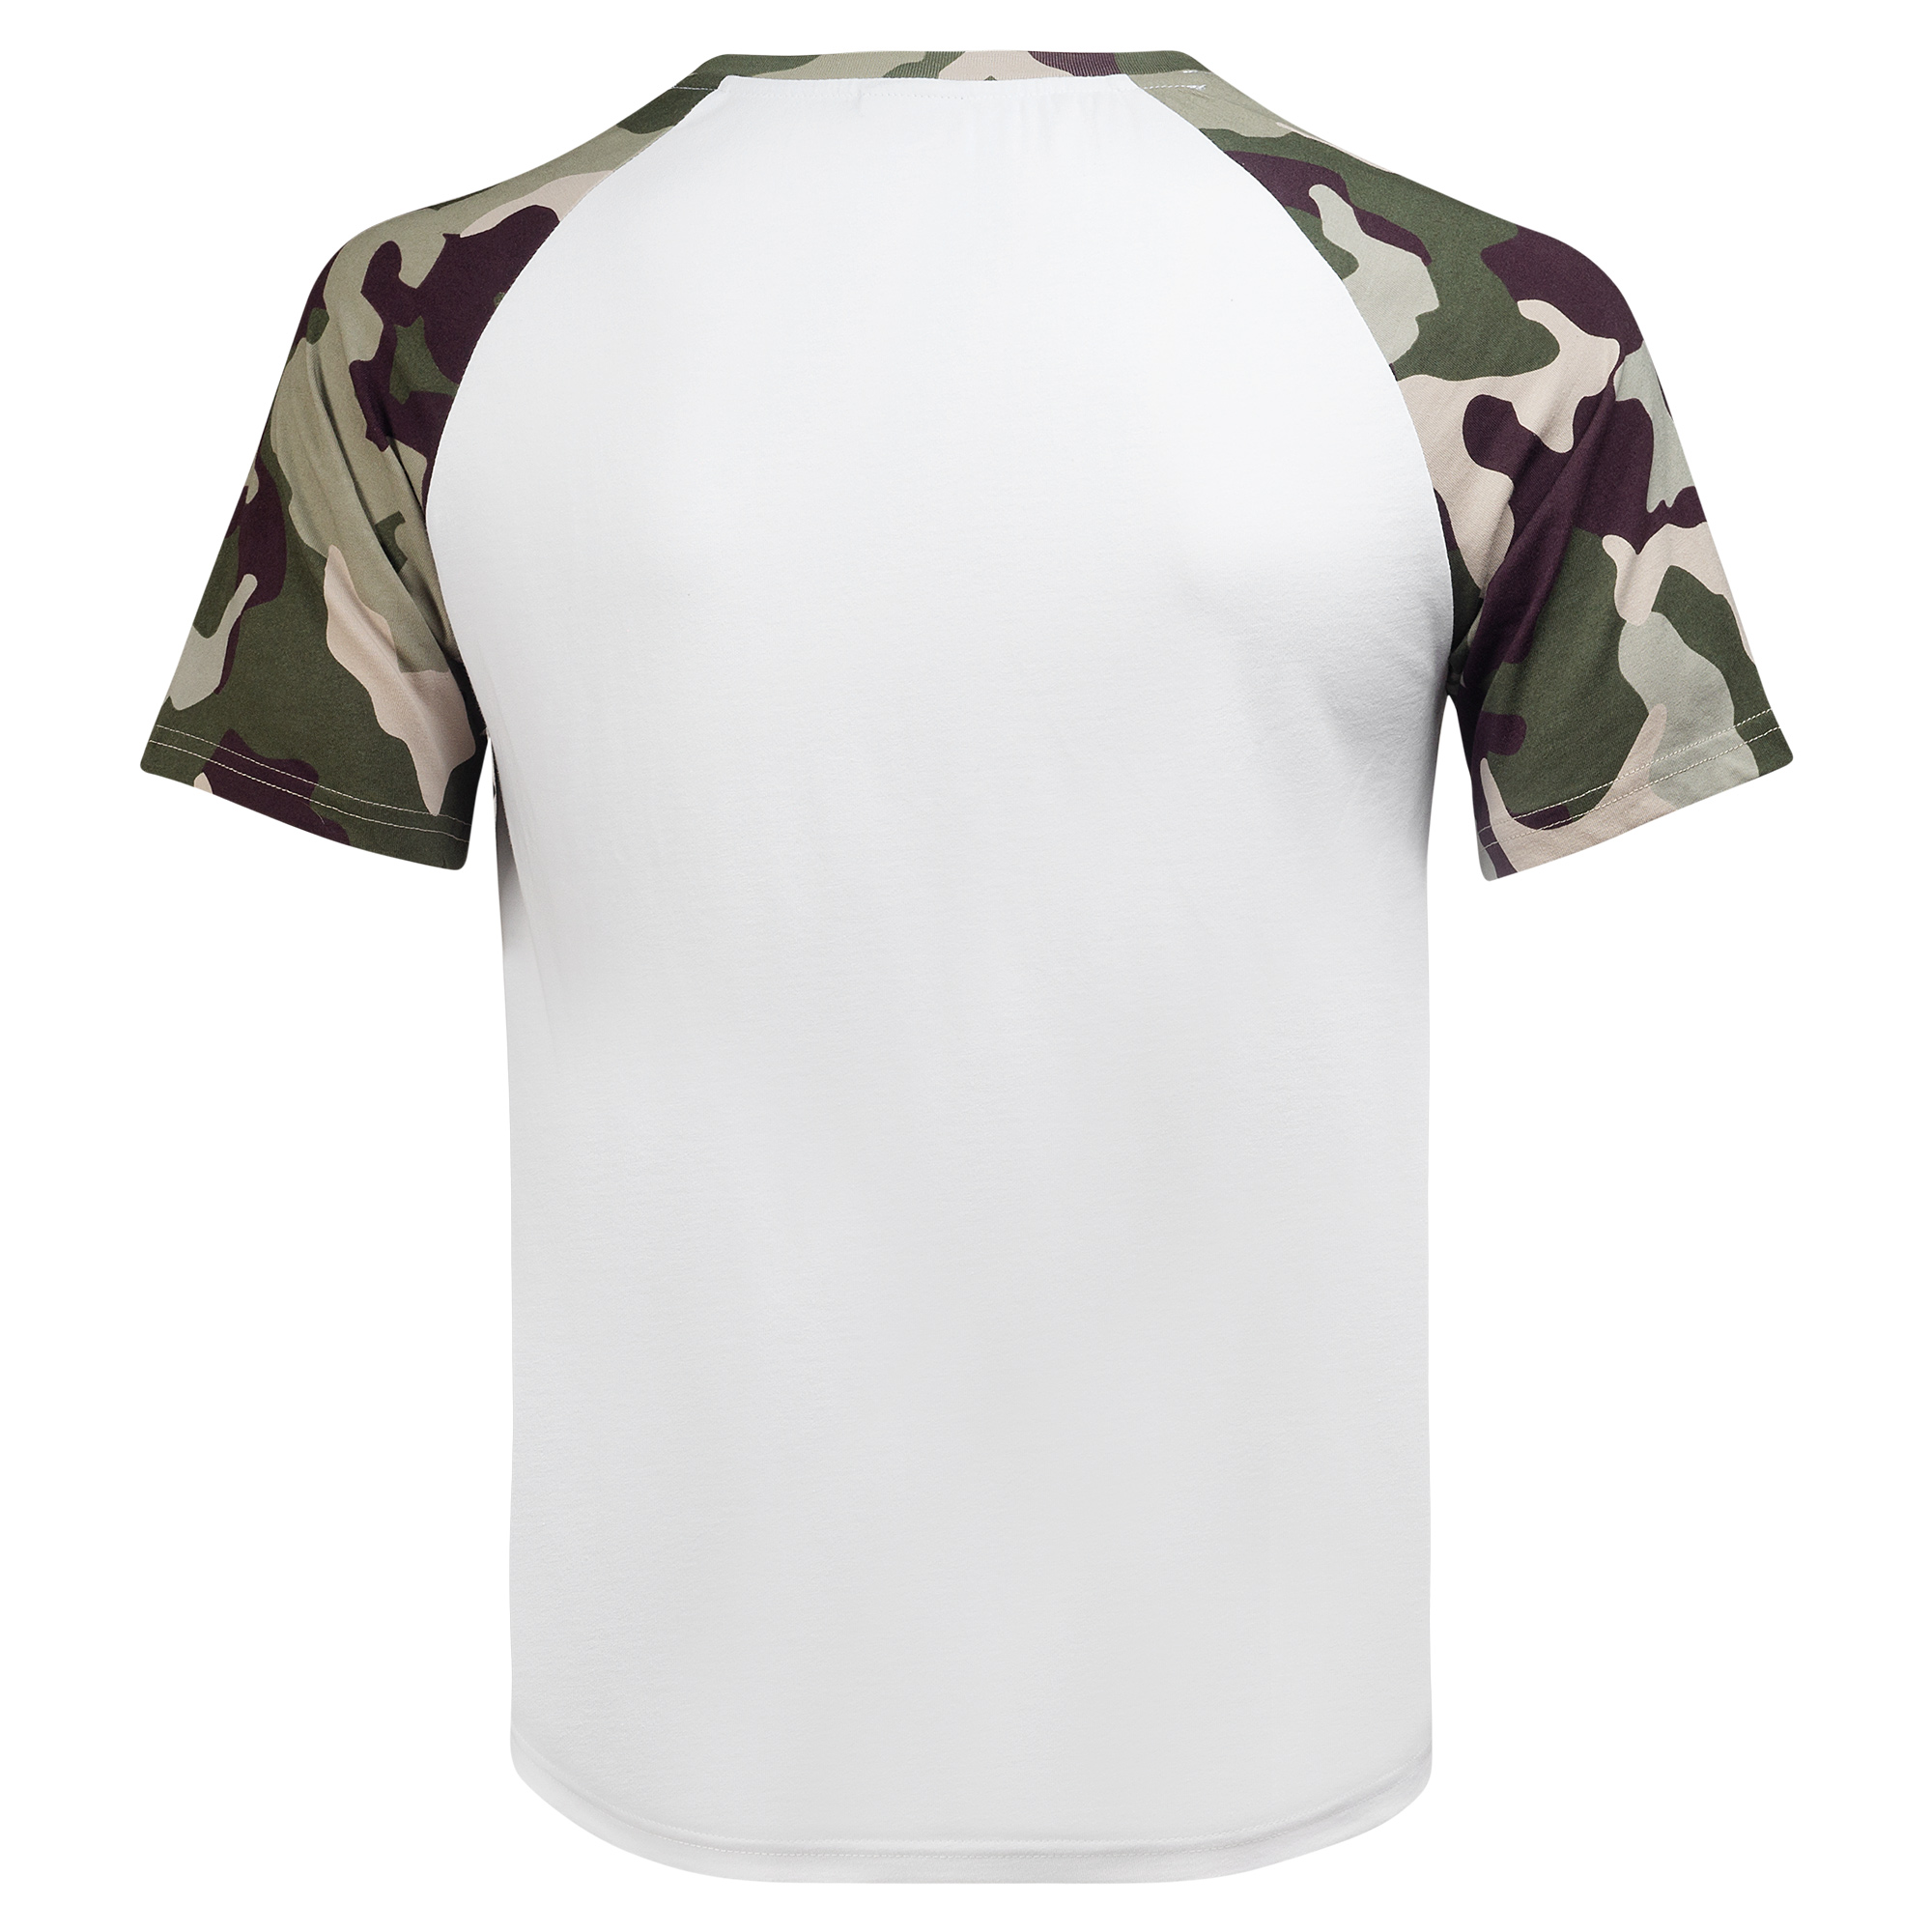 MIG_CTSA001 футболка мужская цвет S100,100%х/б